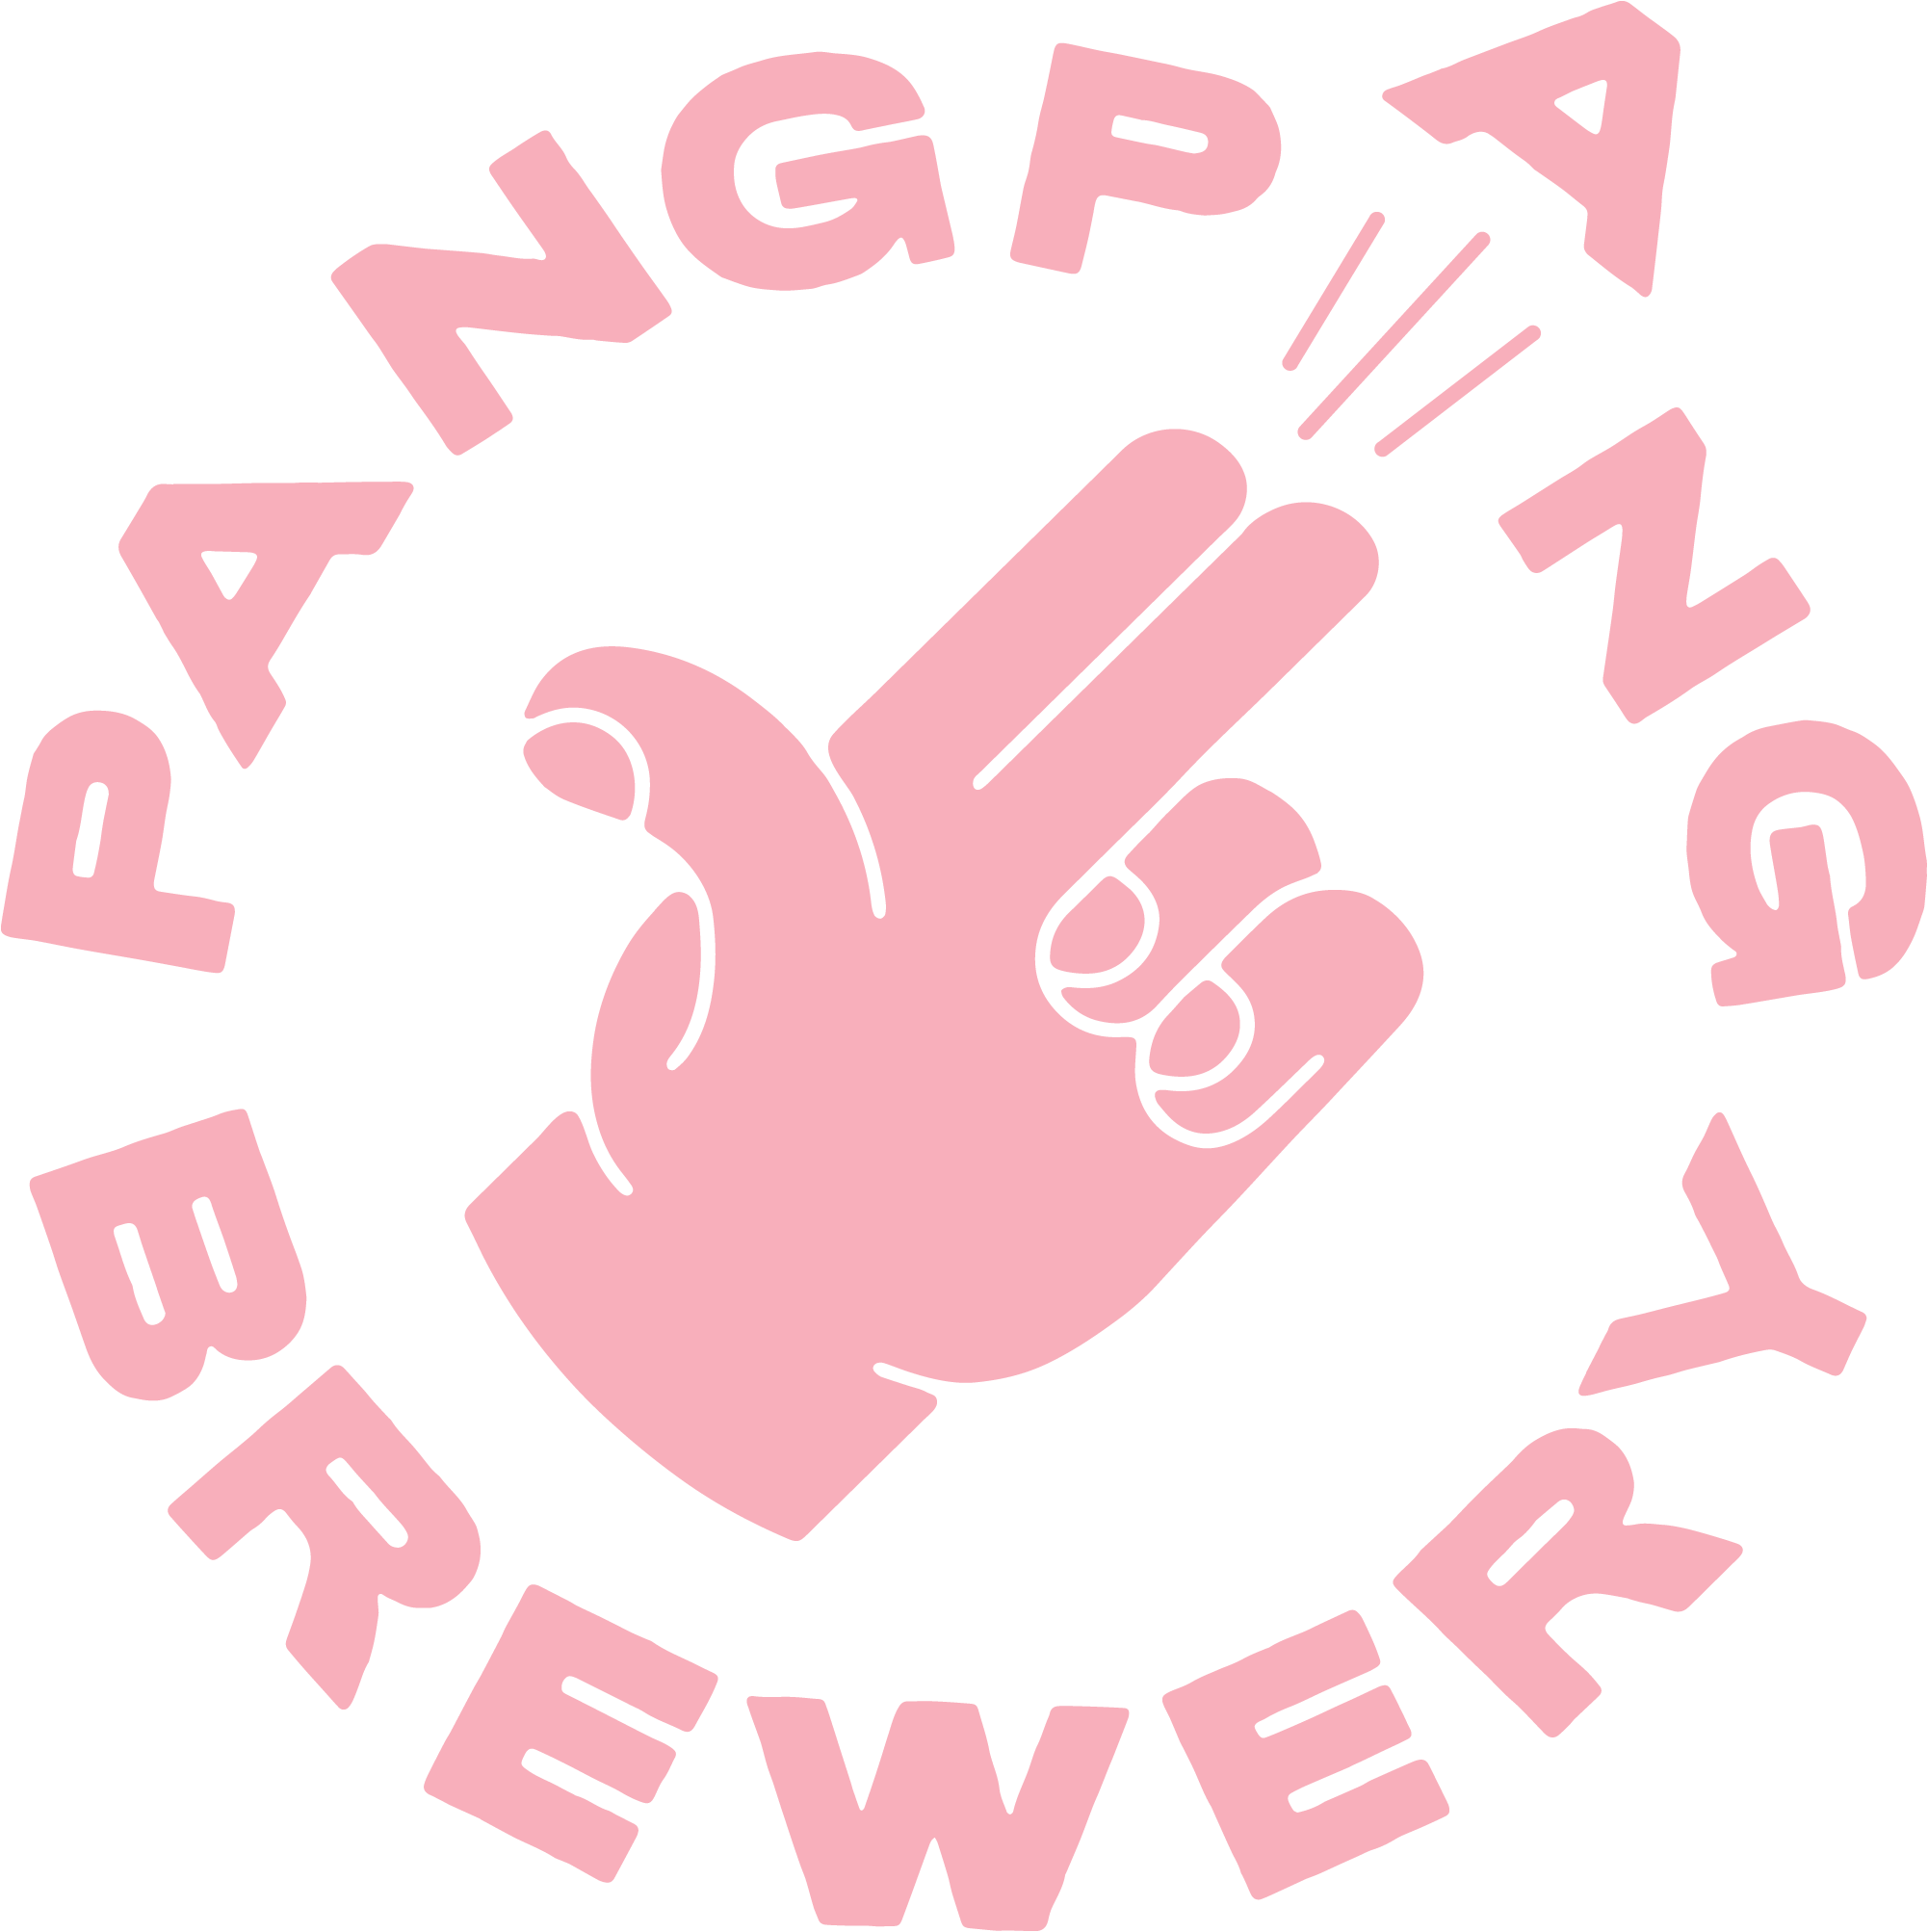 pang pang brewery logo